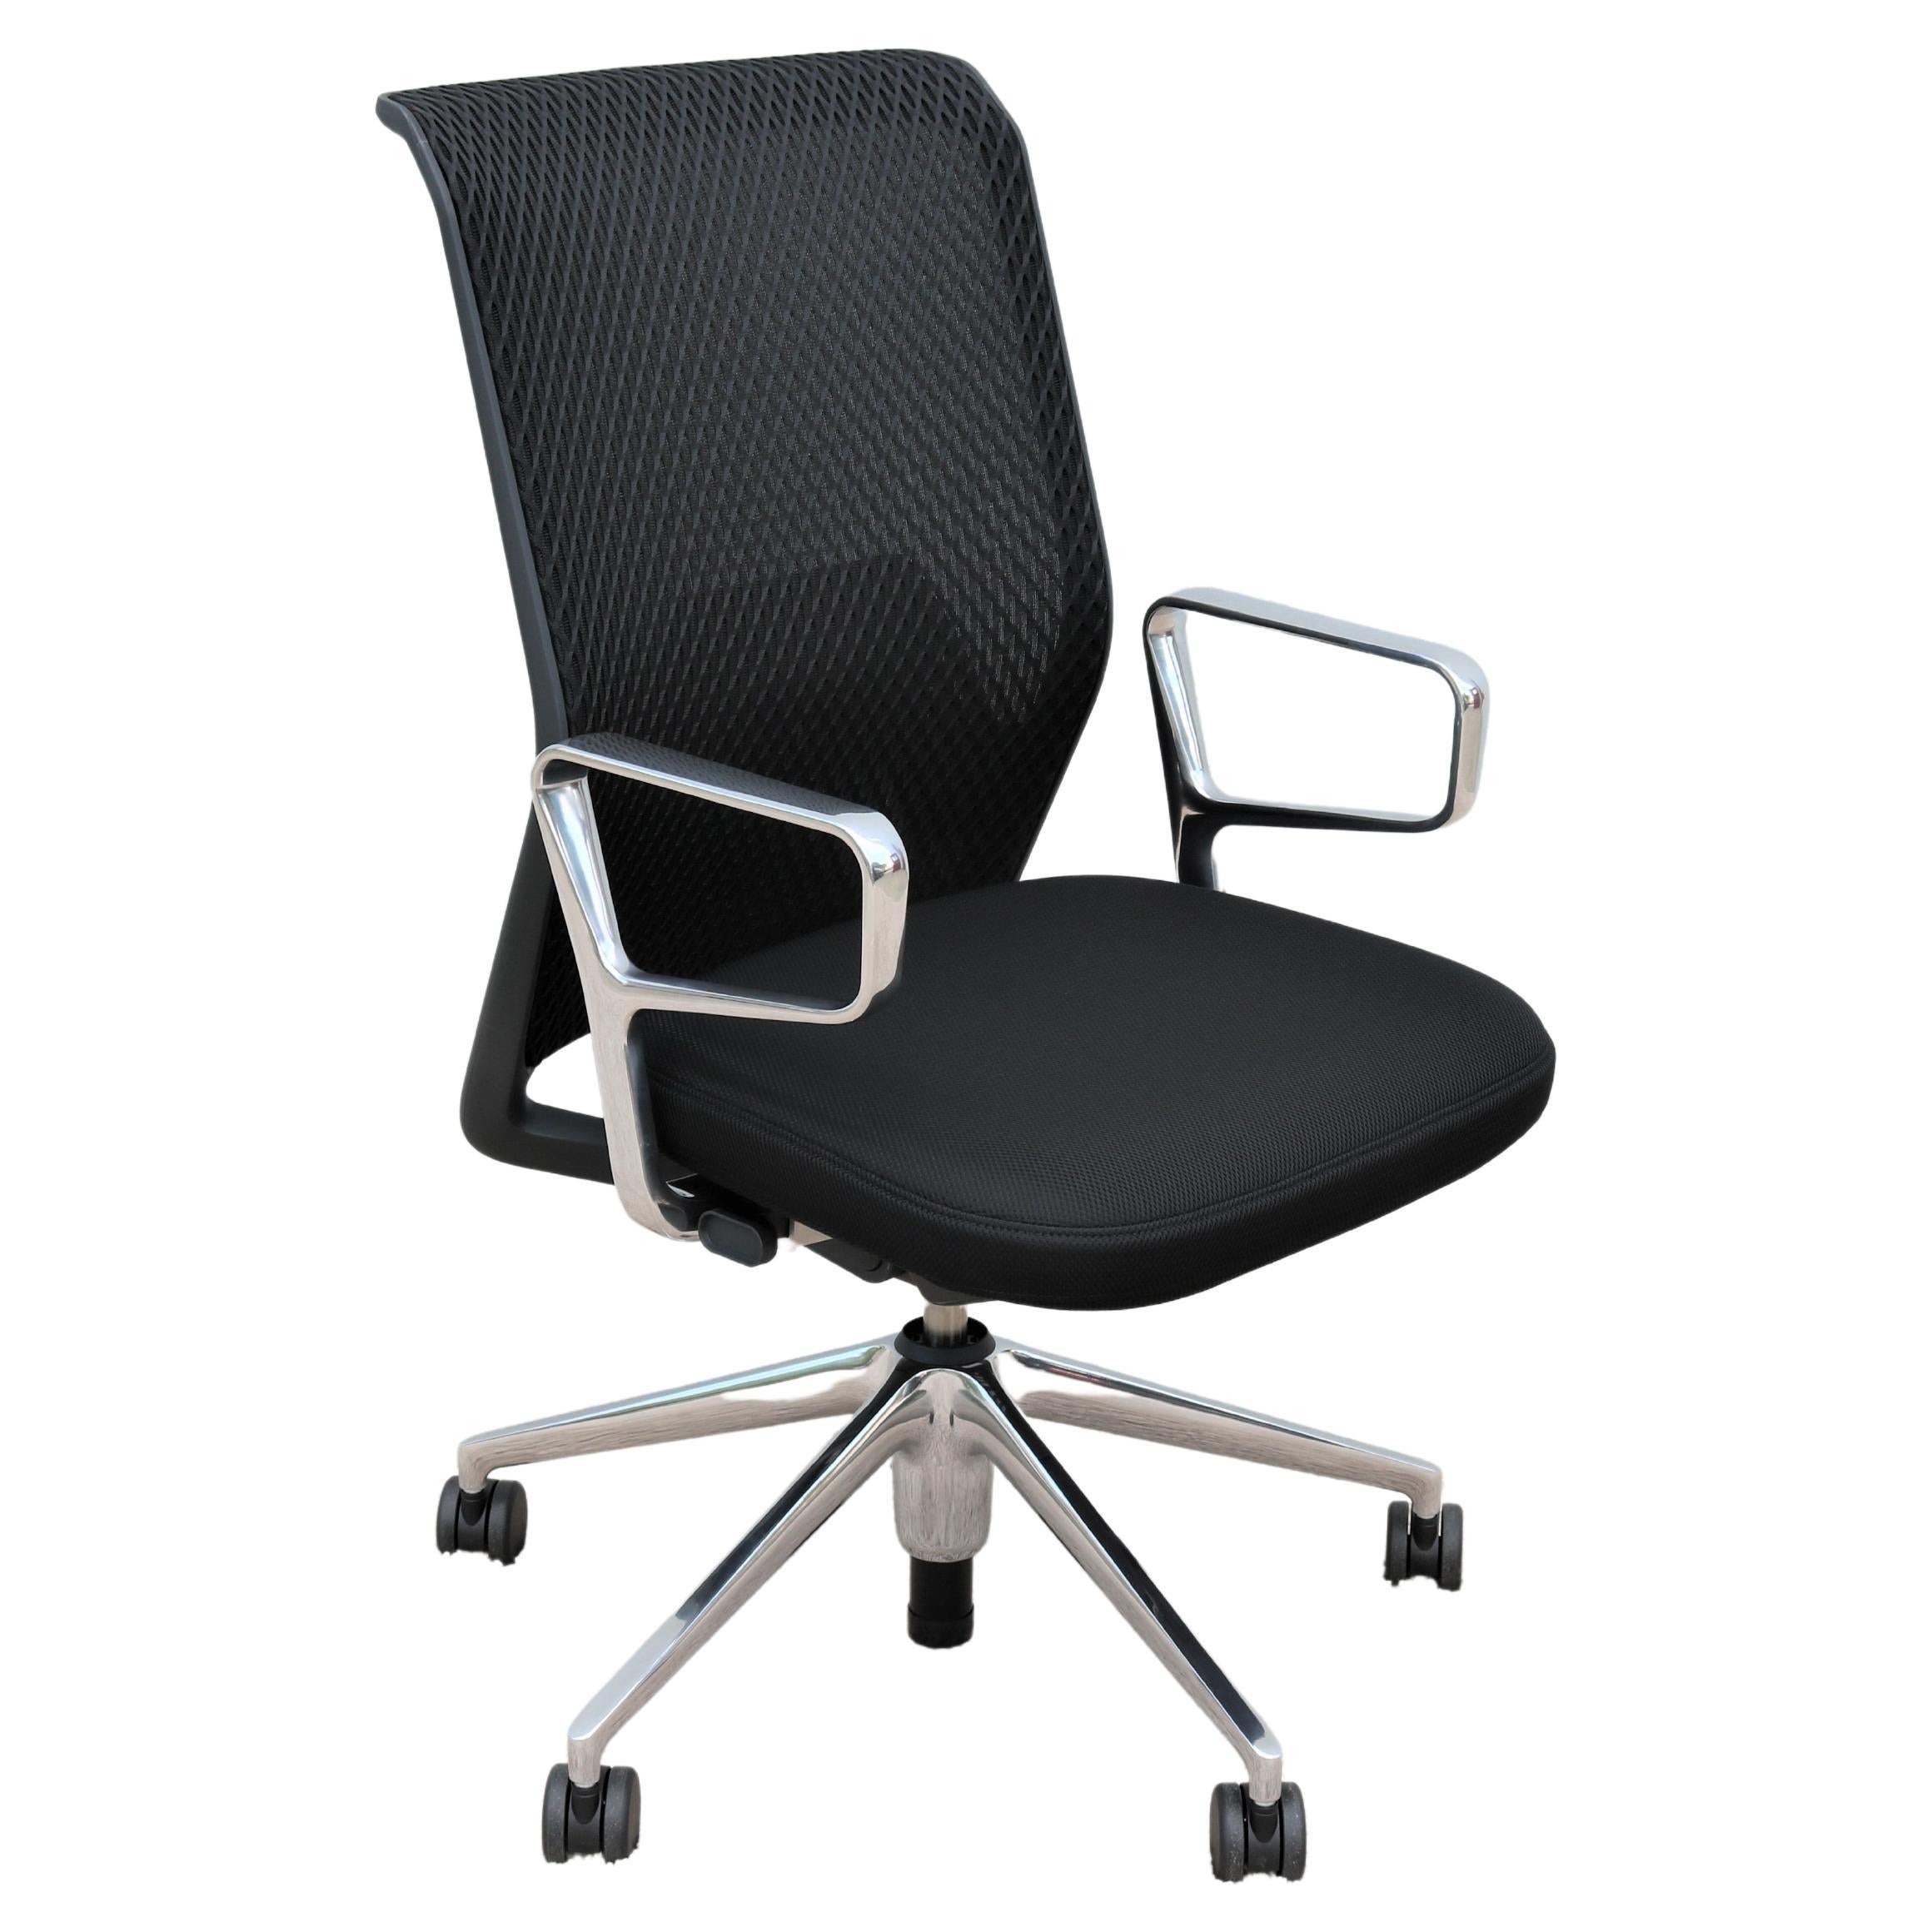 Antonio Citterio for Vitra Ergonomic ID Mesh Black Office Desk Chair, Brand New For Sale